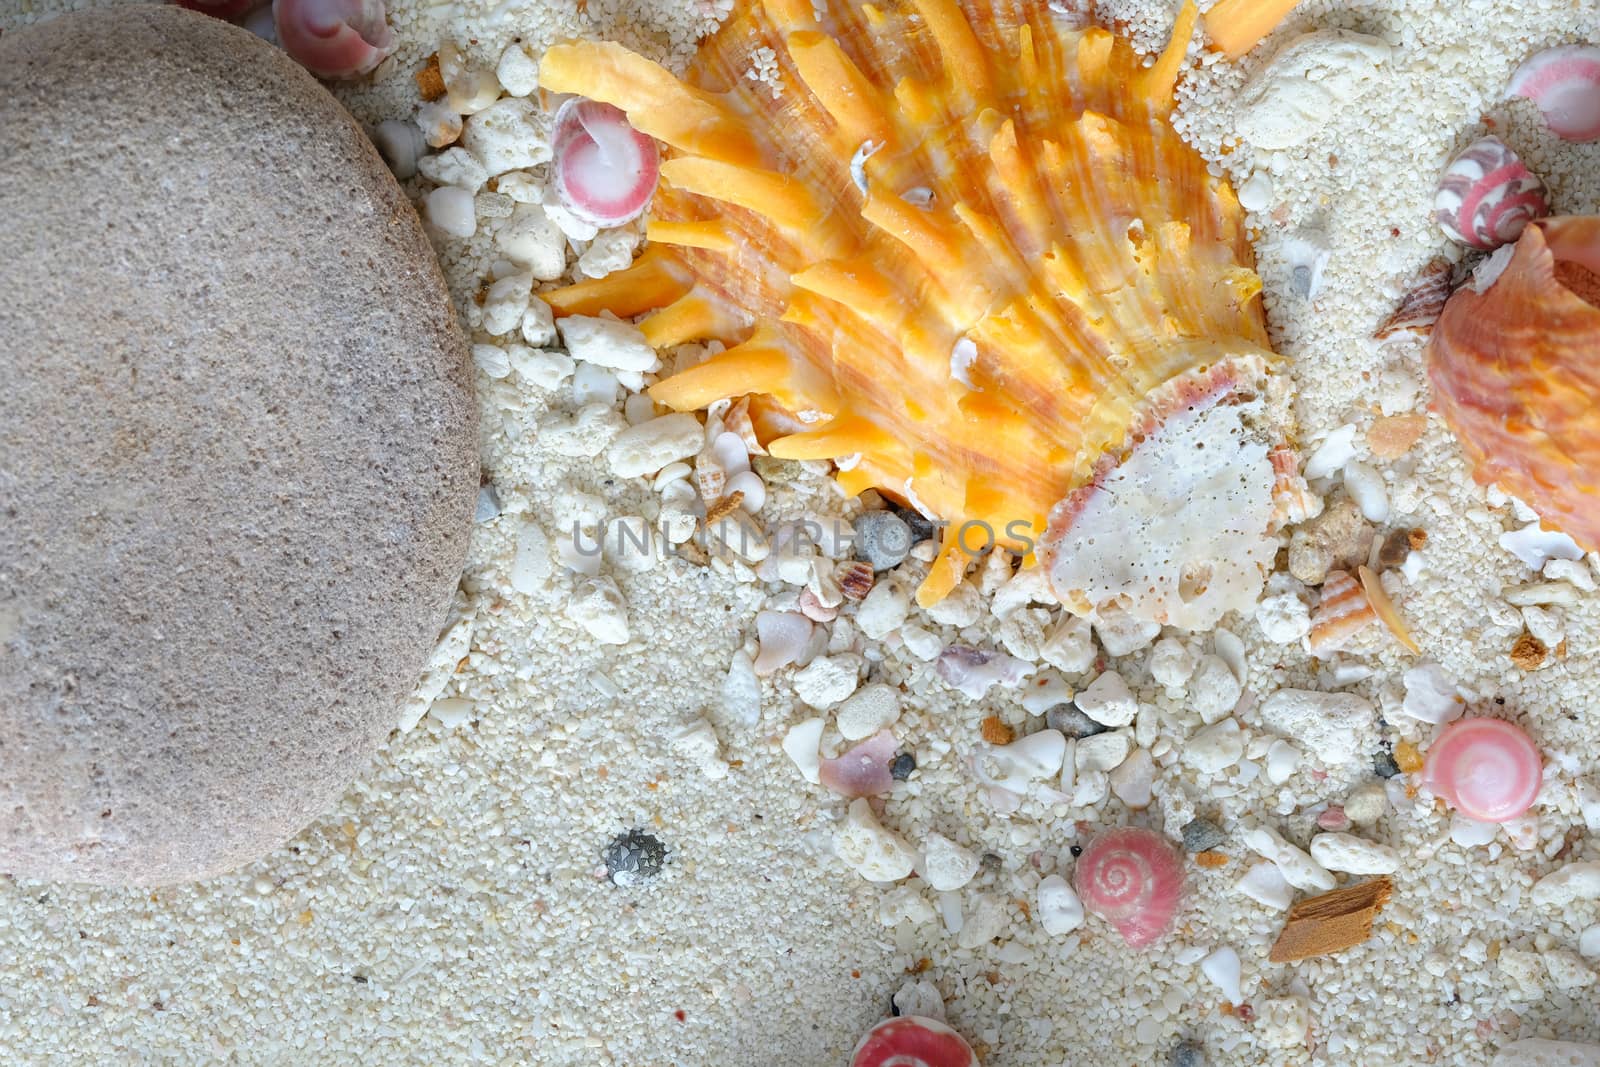 shells of pink button snails (Umbonium vestiarum) and orange spiny scallop (Amusium pleuronectes) on white sand